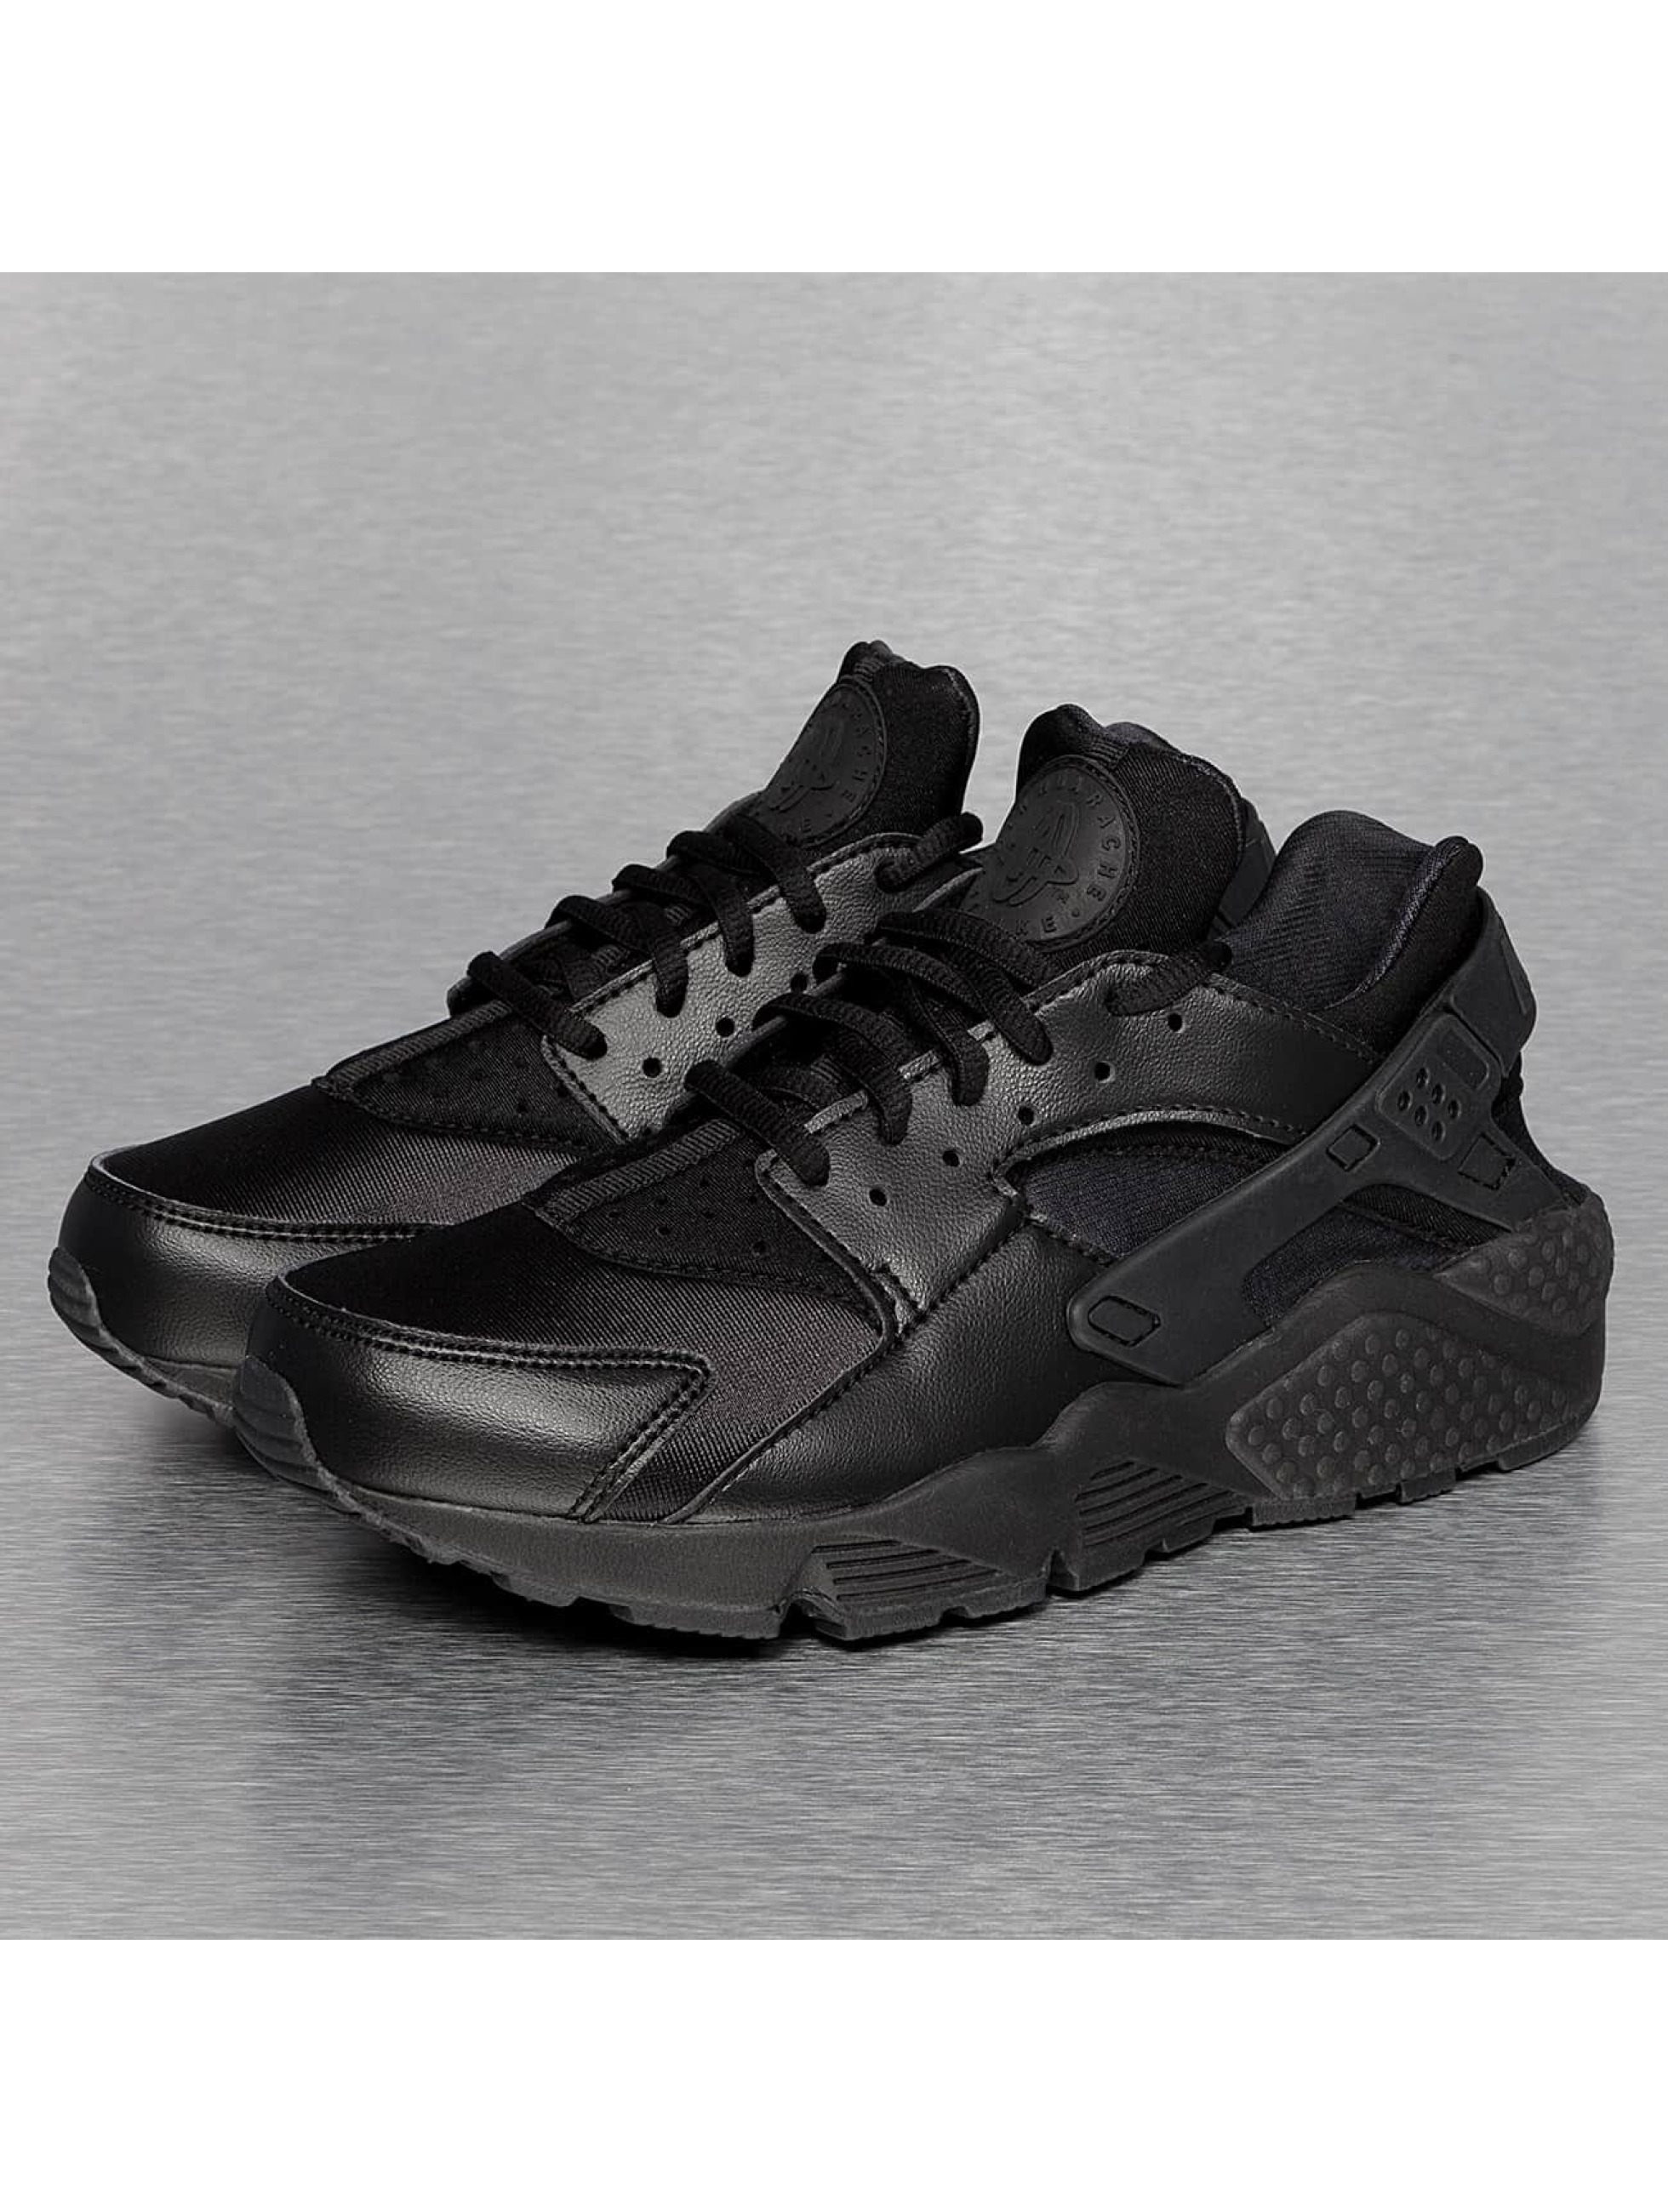 Schuhe / Sneaker Air Huarache Run in schwarz